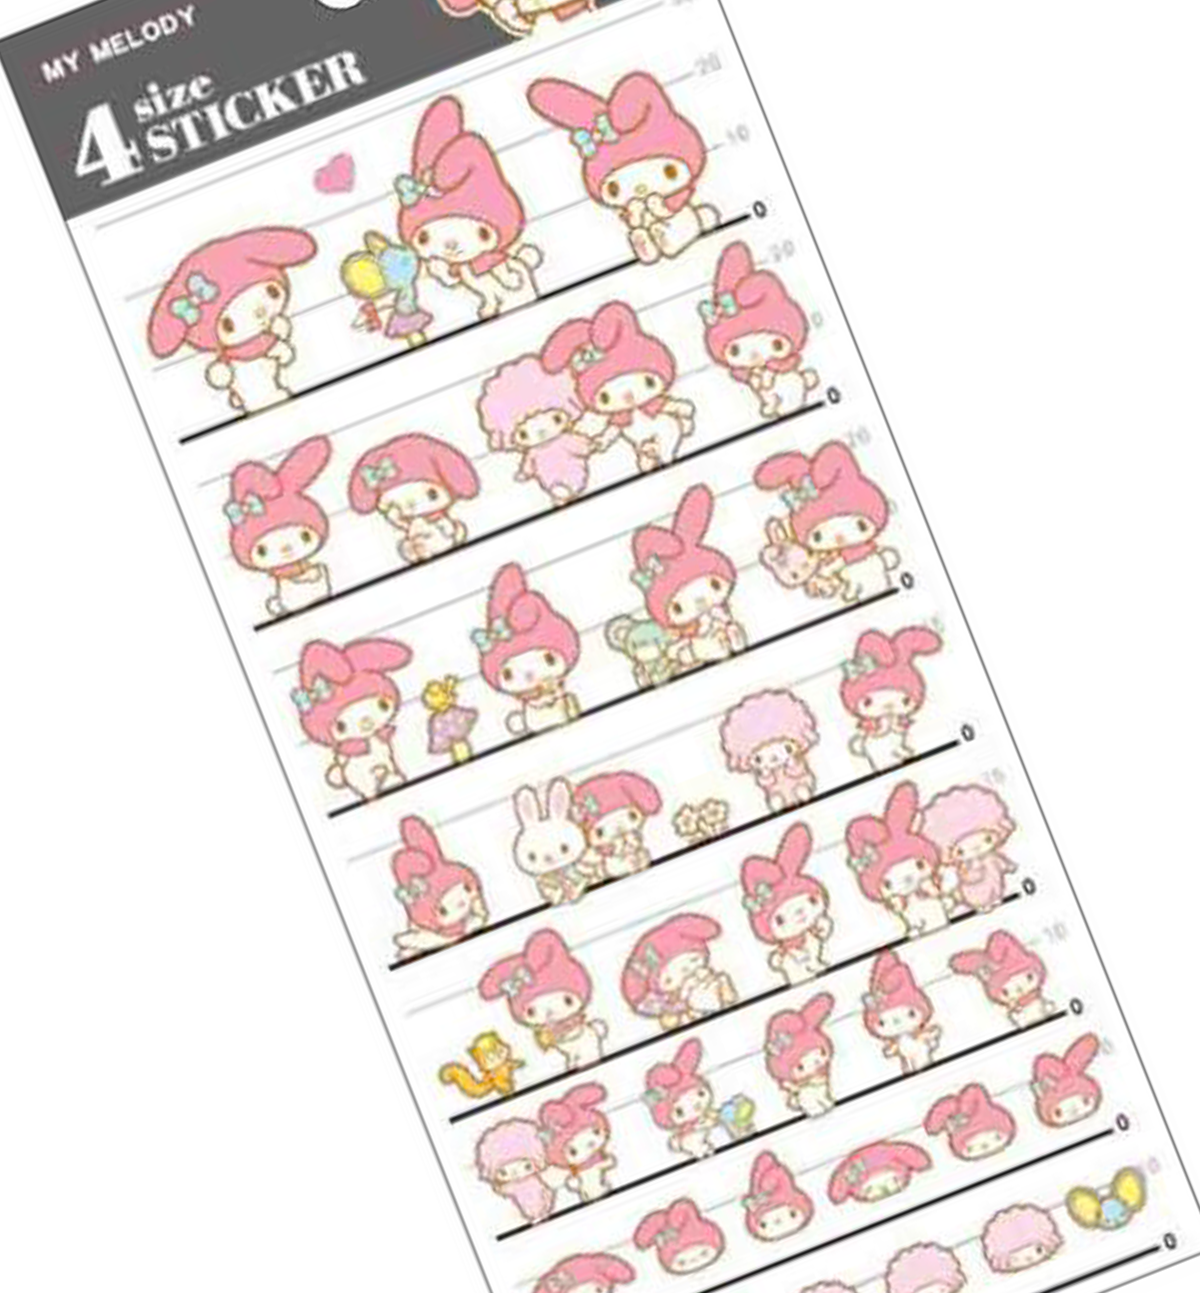 Sanrio 4 Size Sticker [My Melody]